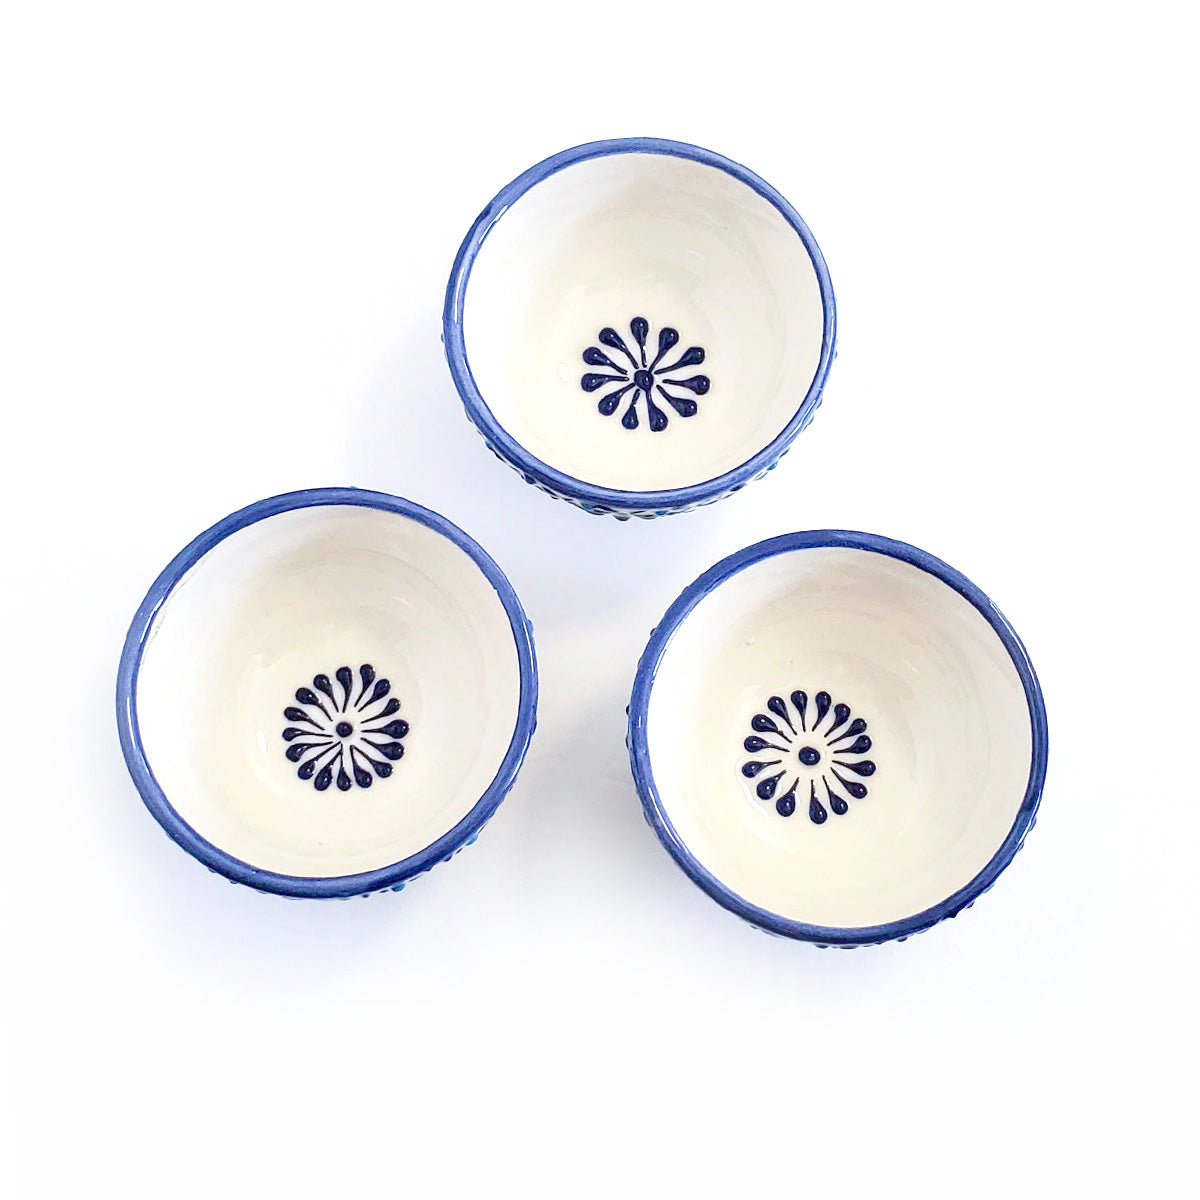 Handpainted Small Turkish Bowls